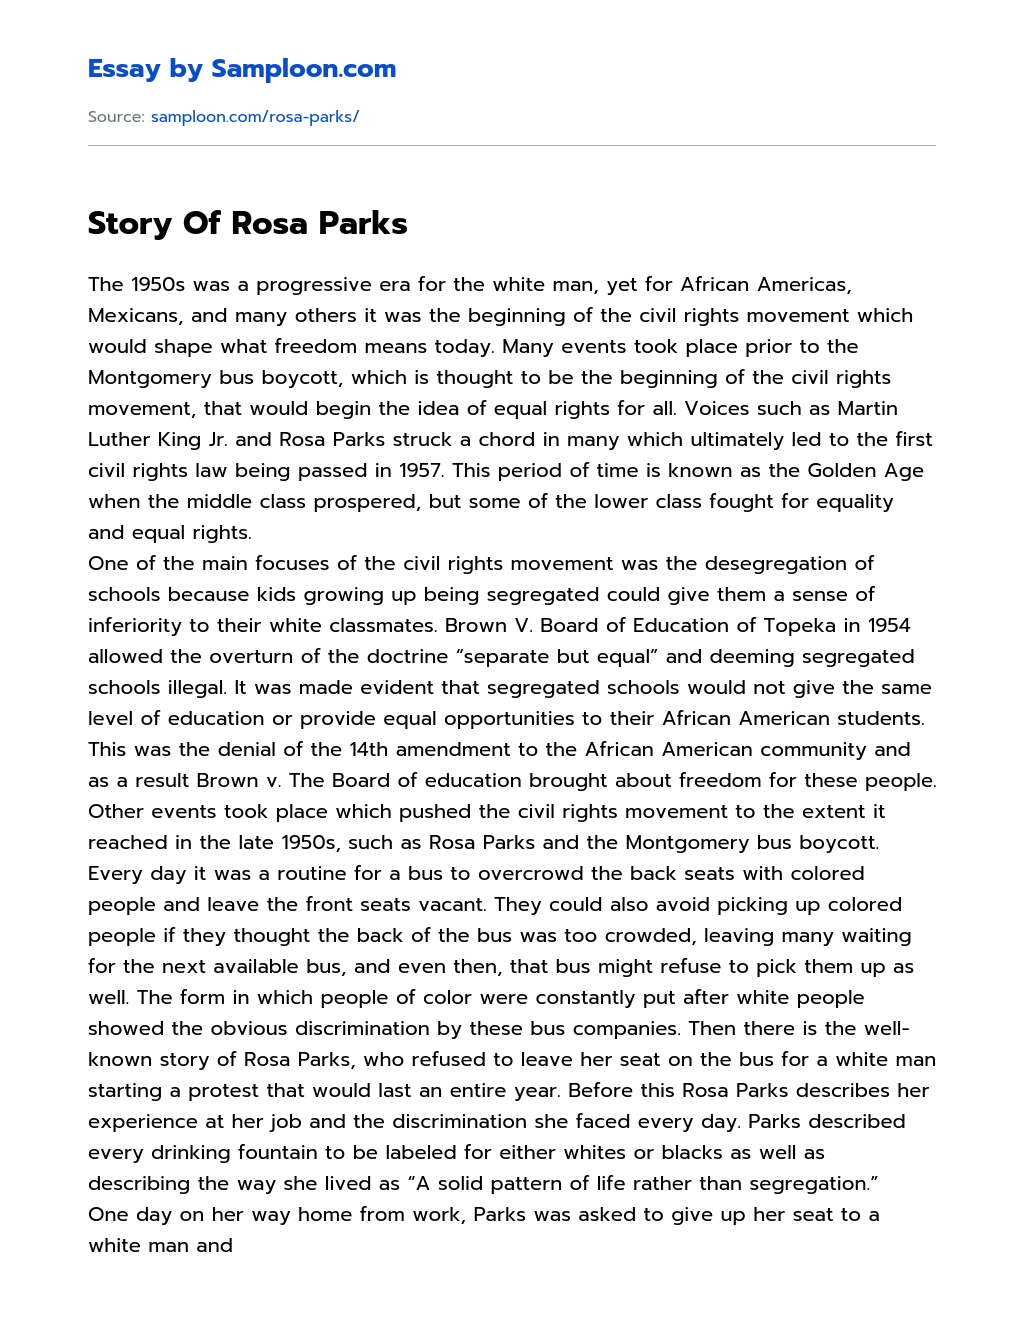 Story Of Rosa Parks essay